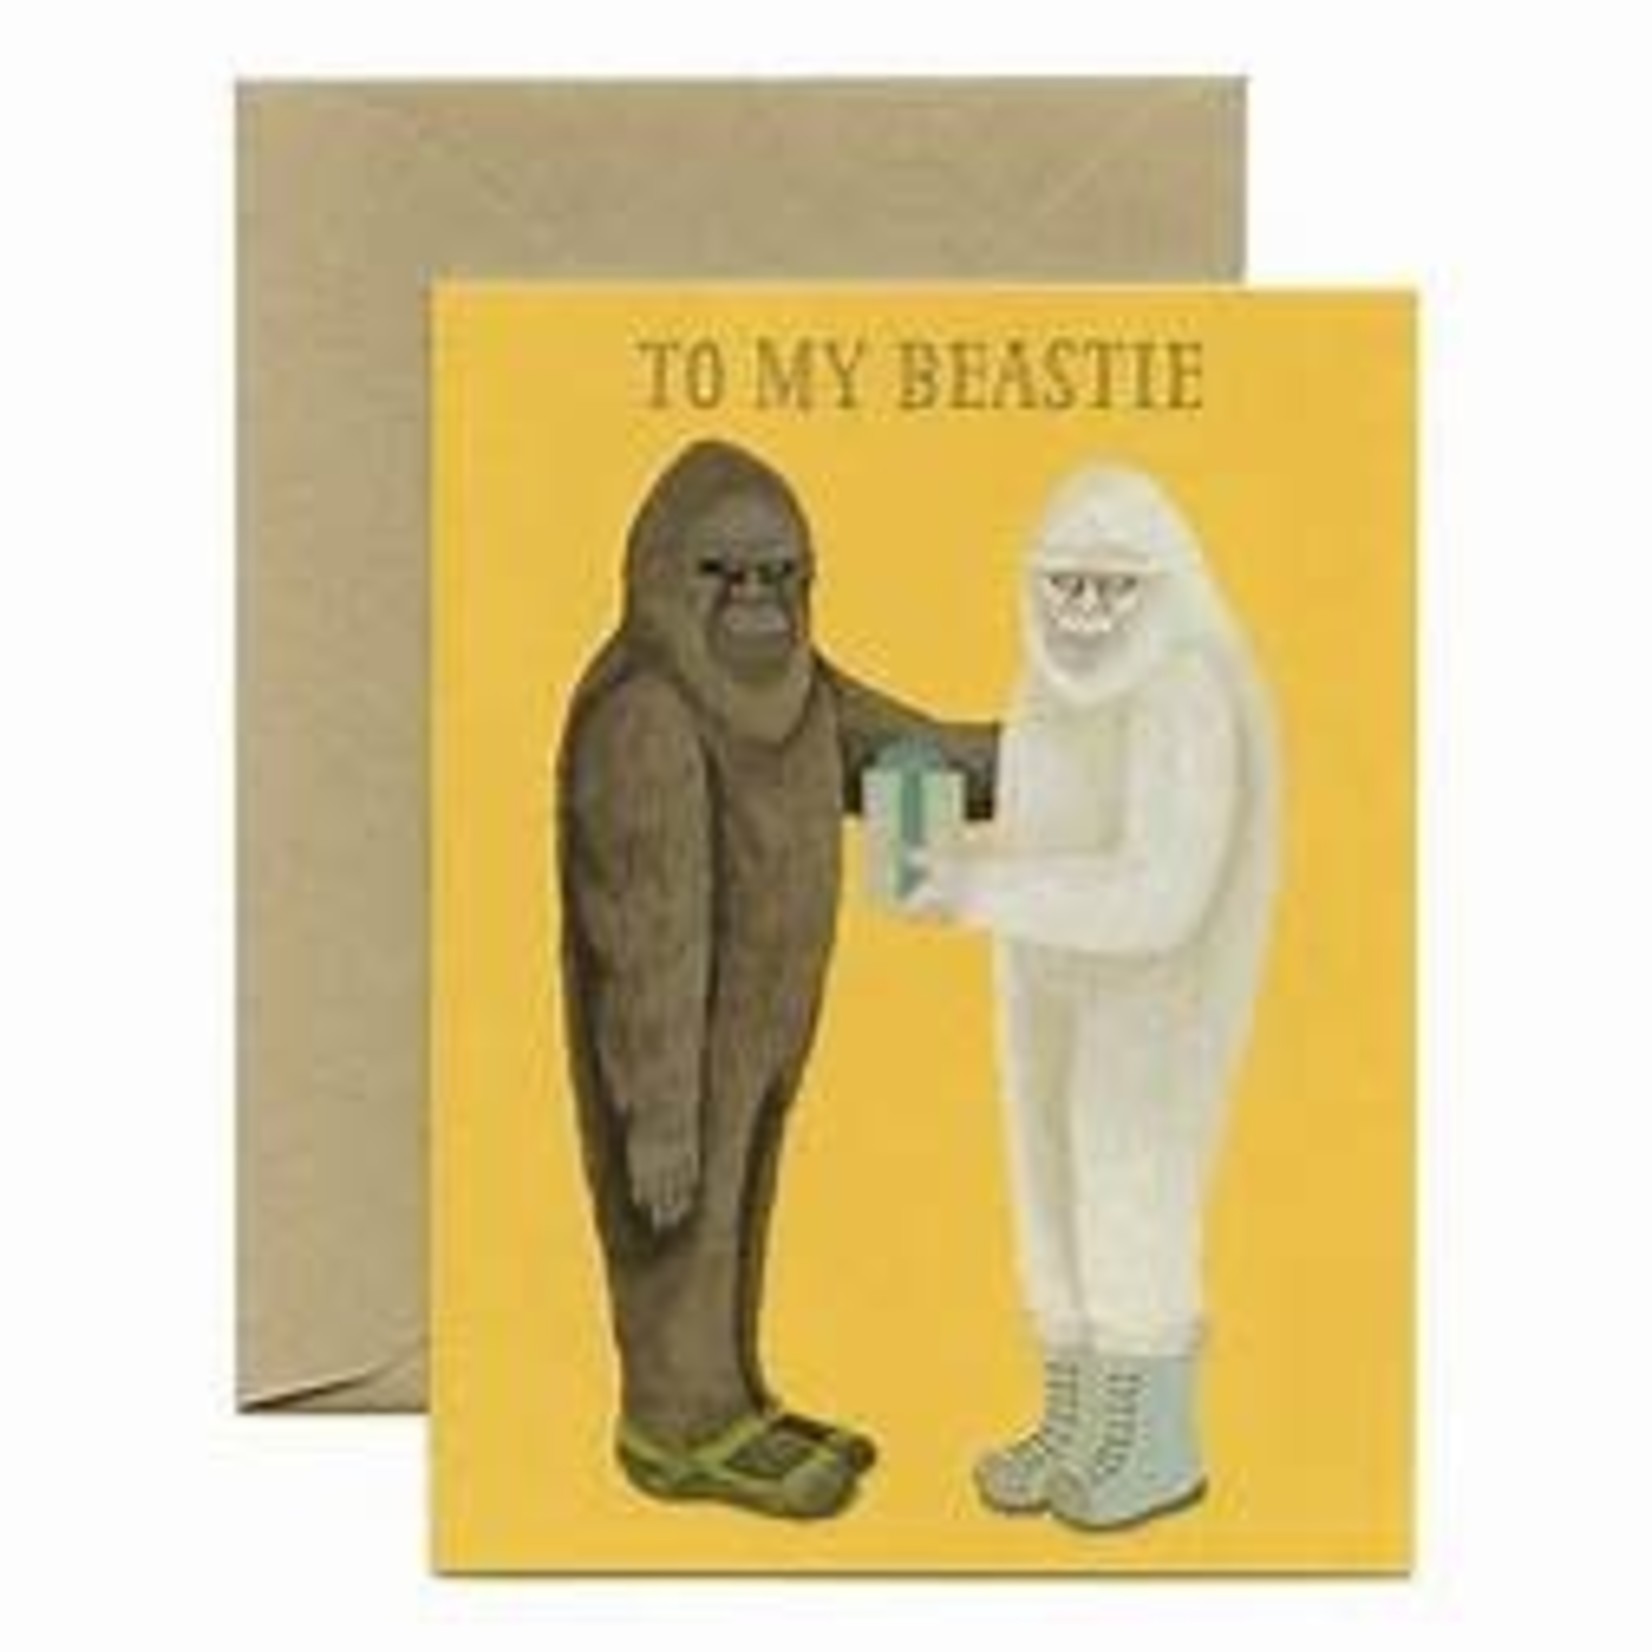 Beastie Card and Envelope